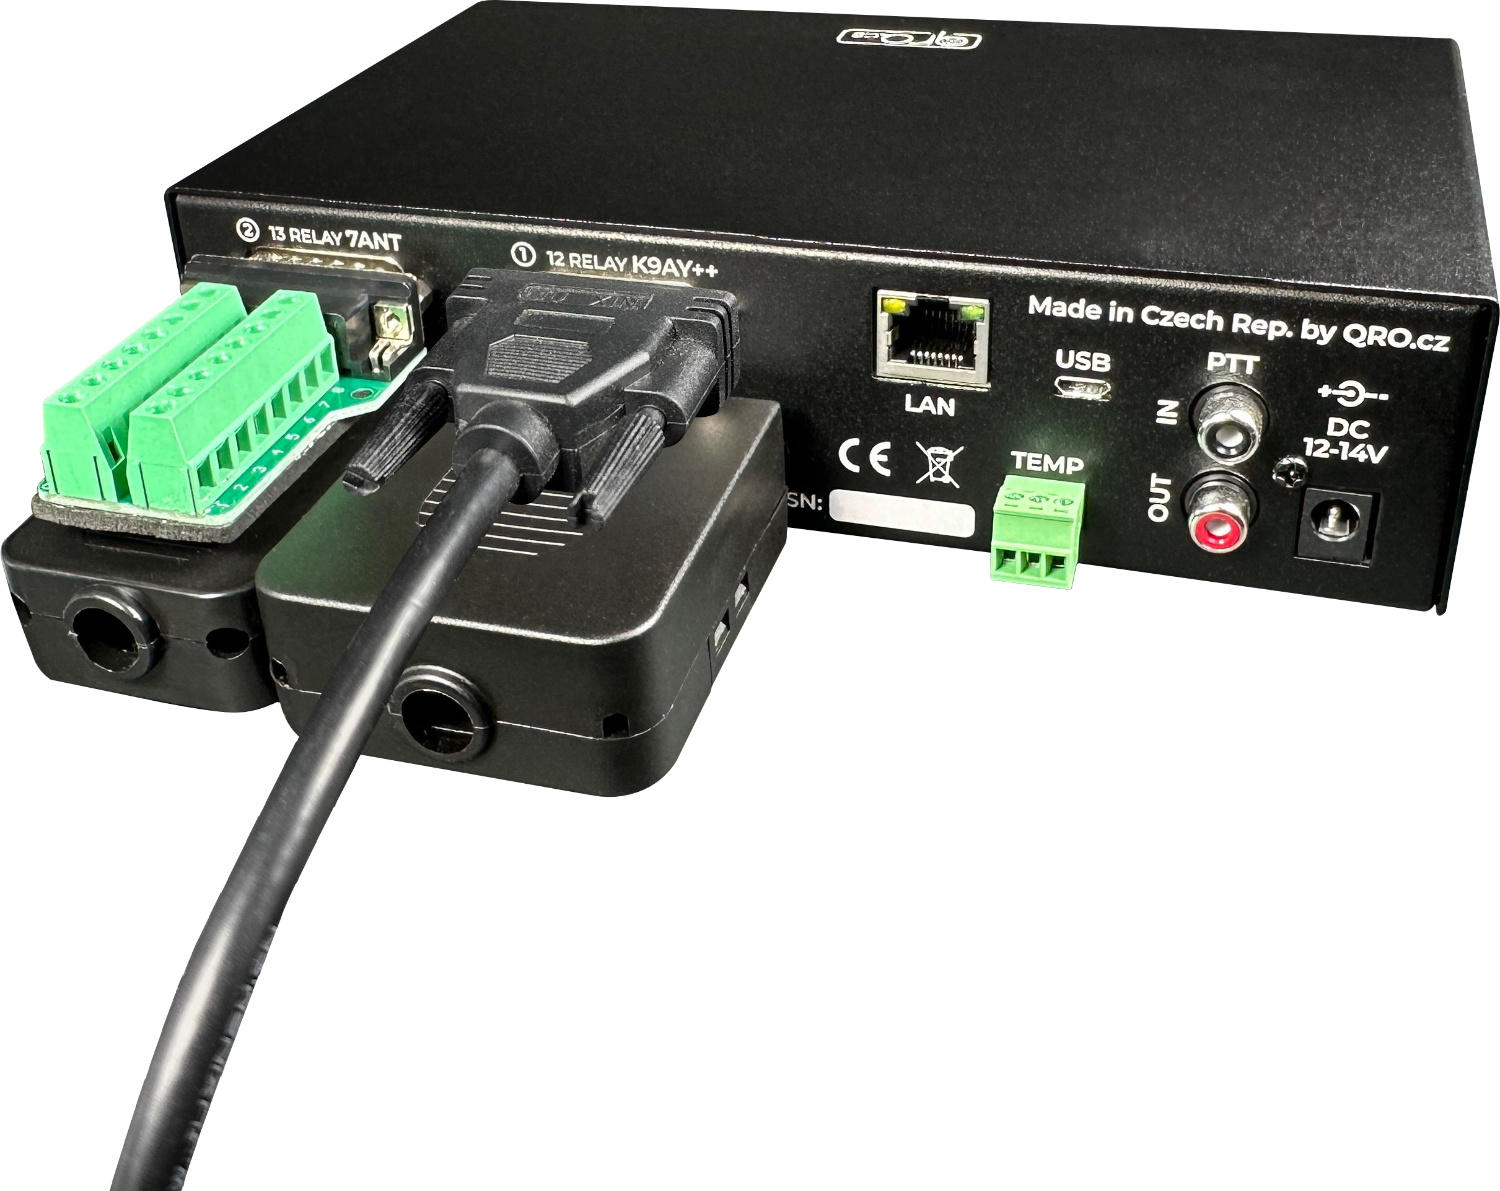 remotius 64 controller with D-SUB 15 cable qro.cz hamparts.shop